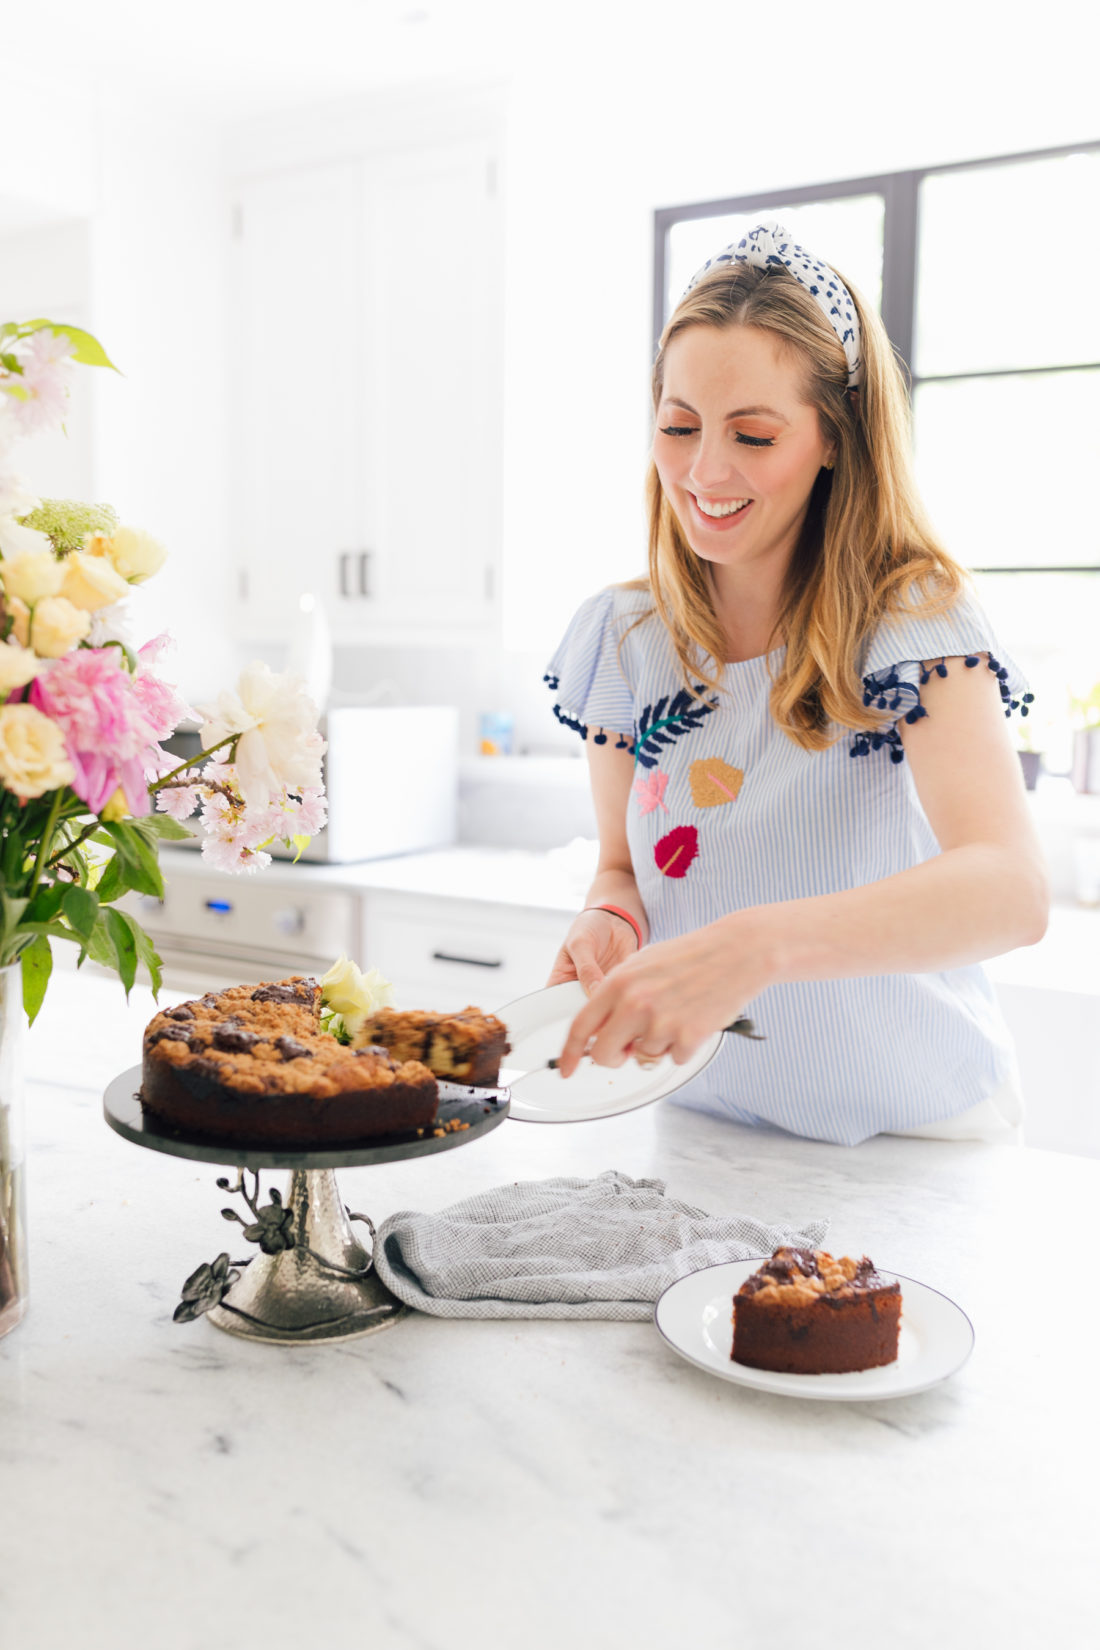 Eva Amurri Martino cuts into her delicious coffee cake at her home in Connecticut